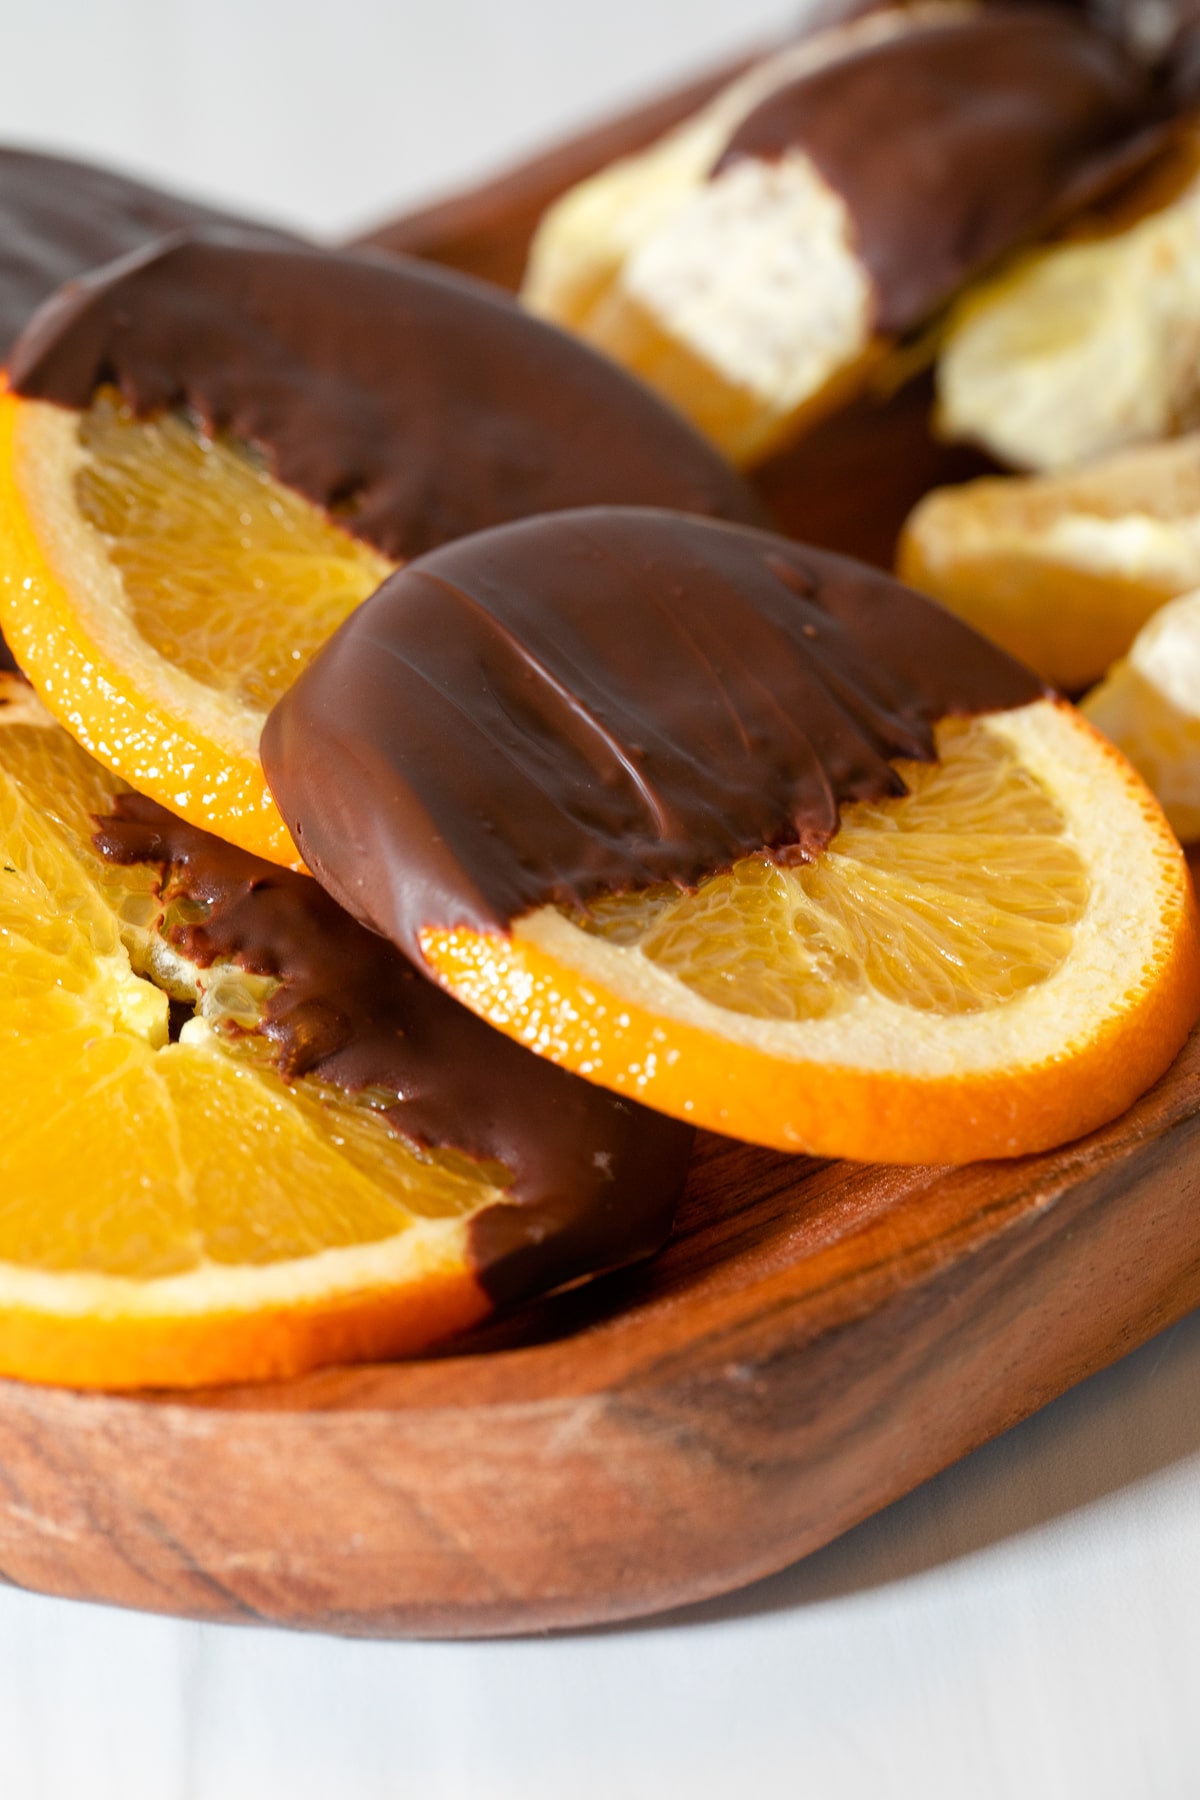 chocolate covered orange slice up close.